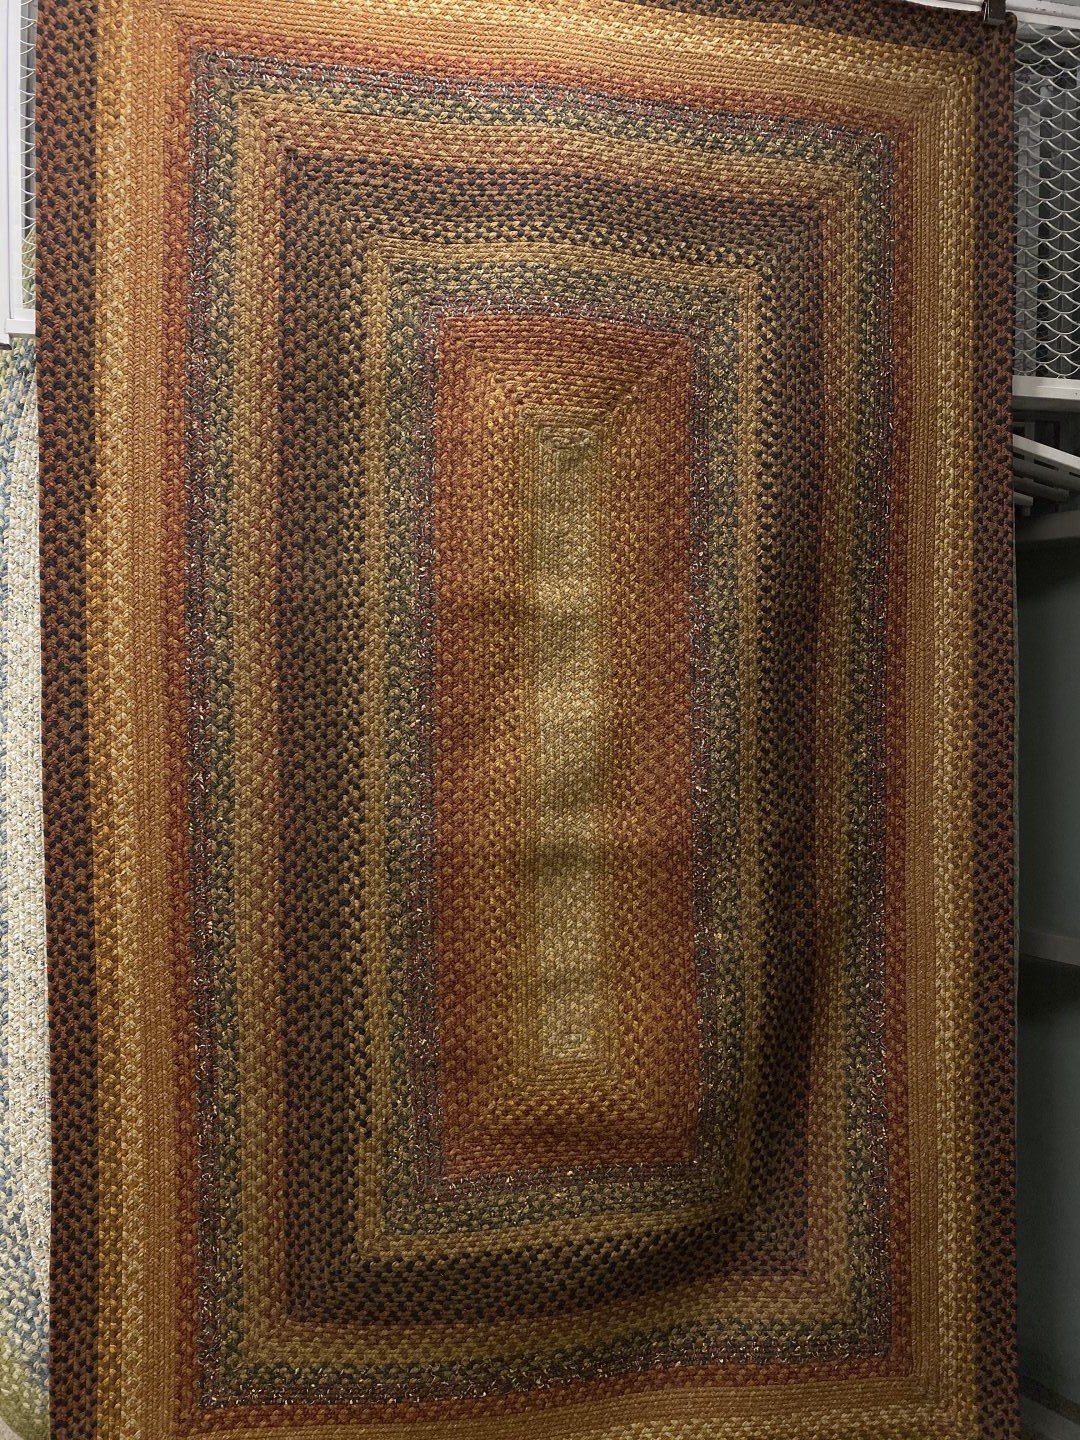 Homespice Decor Peppercorn Cotton Braided Rug